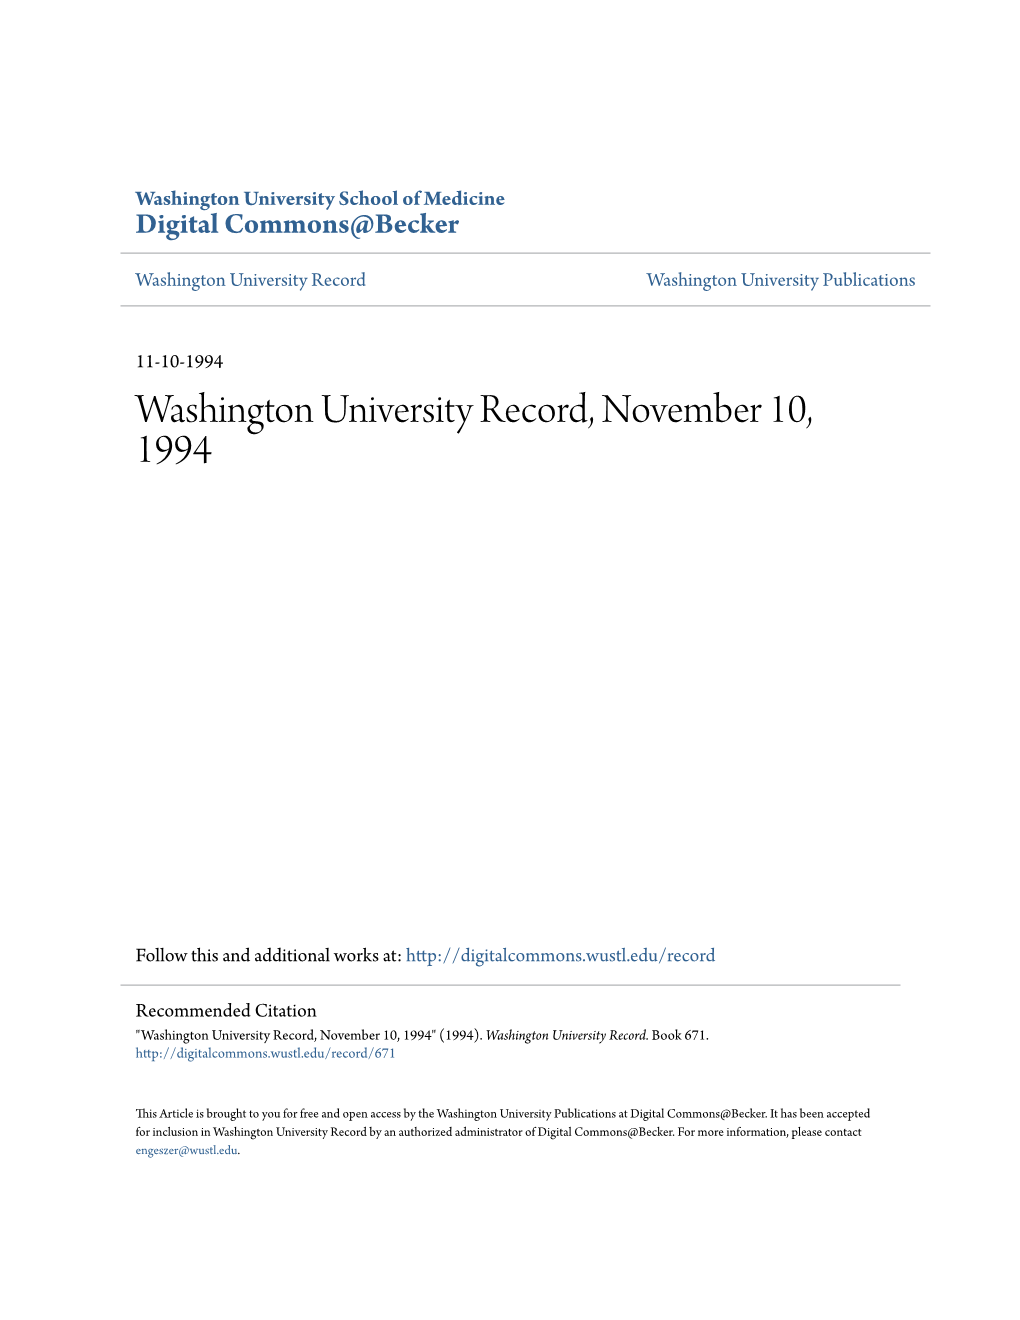 Washington University Record, November 10, 1994